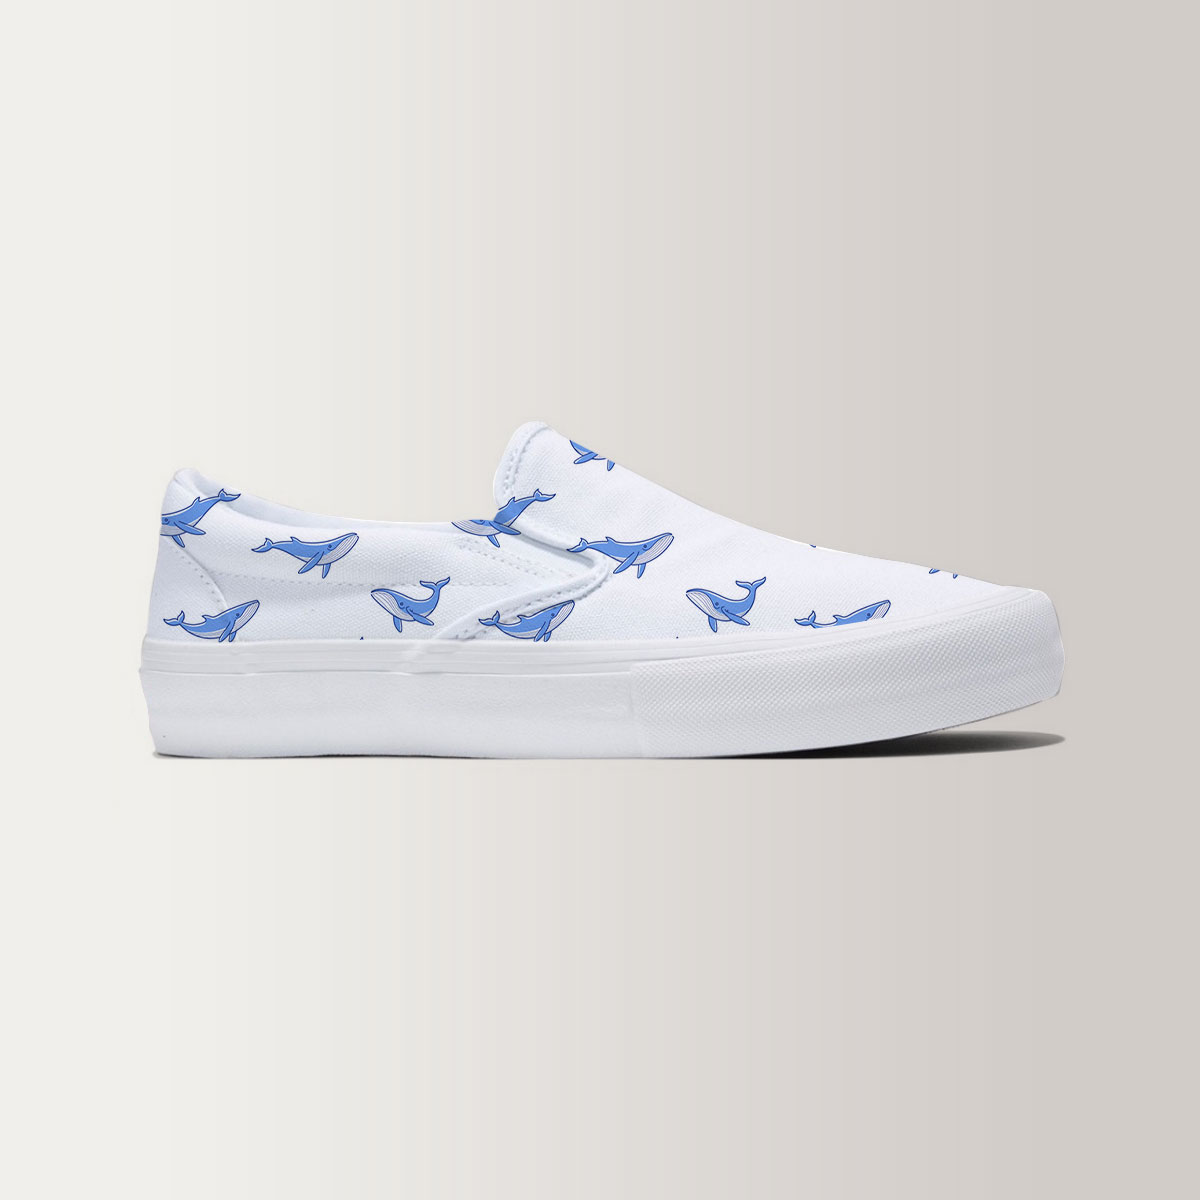 Lovely Blue Whale On White Slip On Sneakers